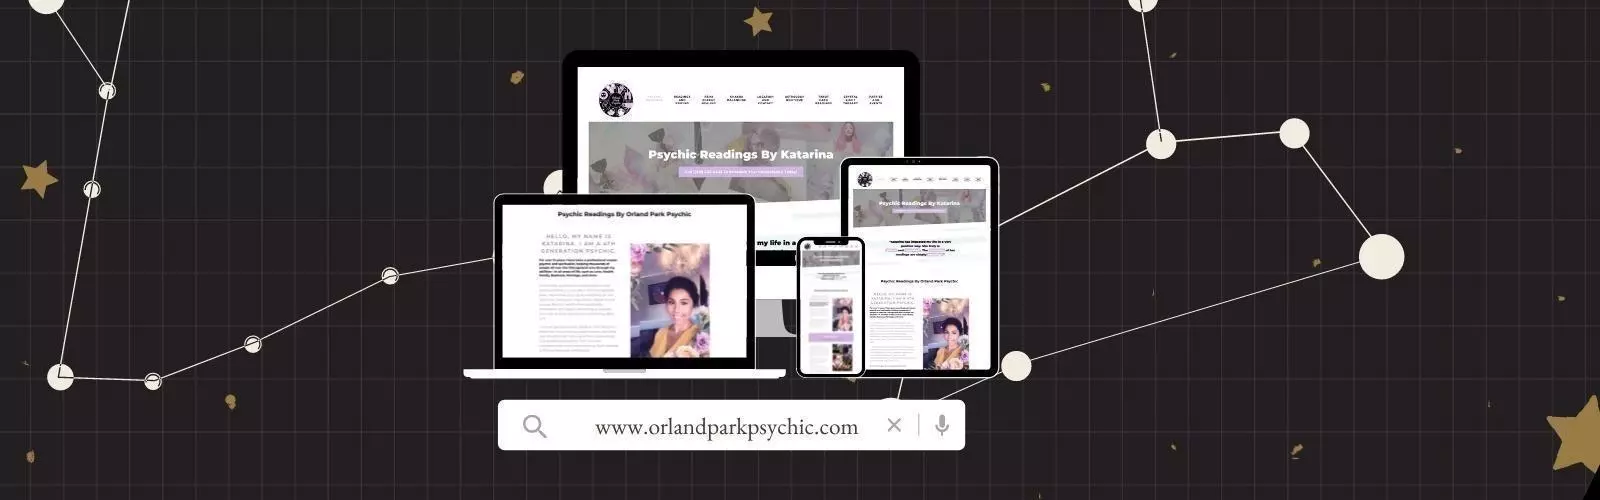 Orland Park Psychic - Astrology Boutique Website Showcase